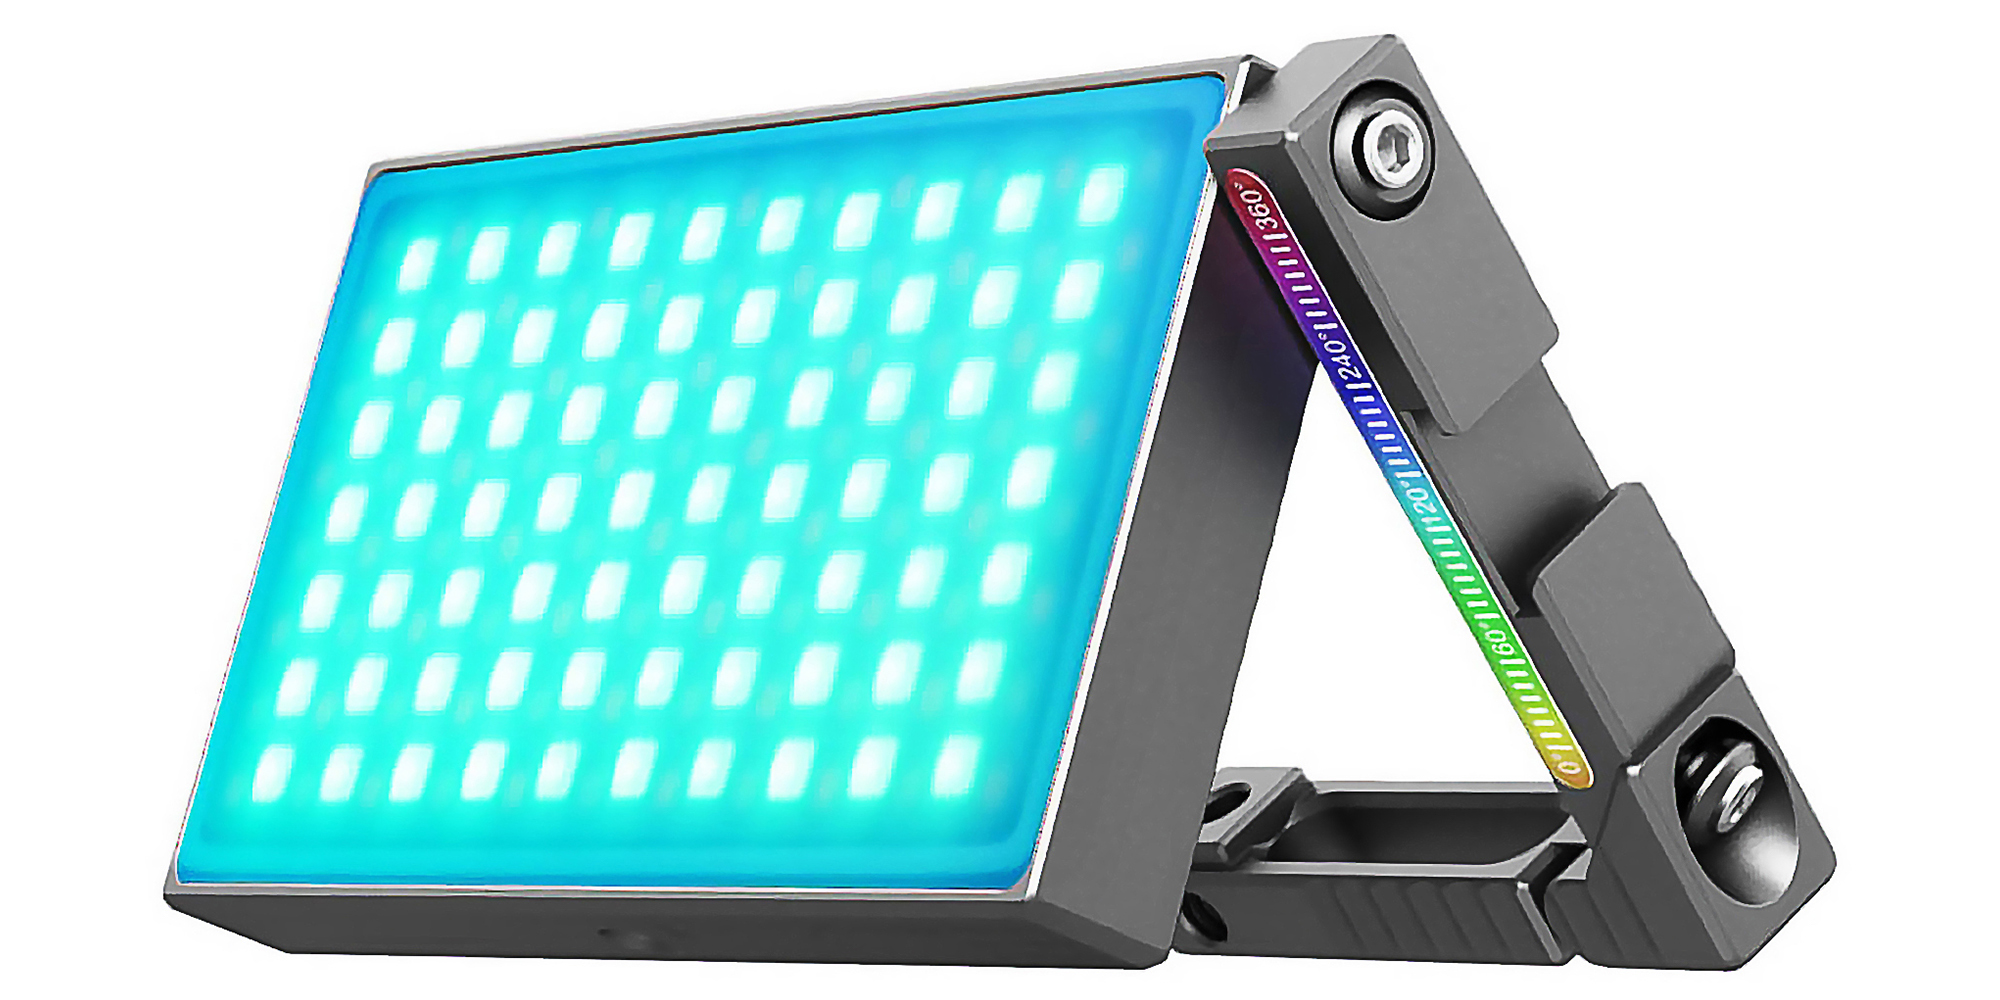 Lampa LED Ulanzi R70 - RGB, WB (2700 K - 8500 K) - Magia kolorów